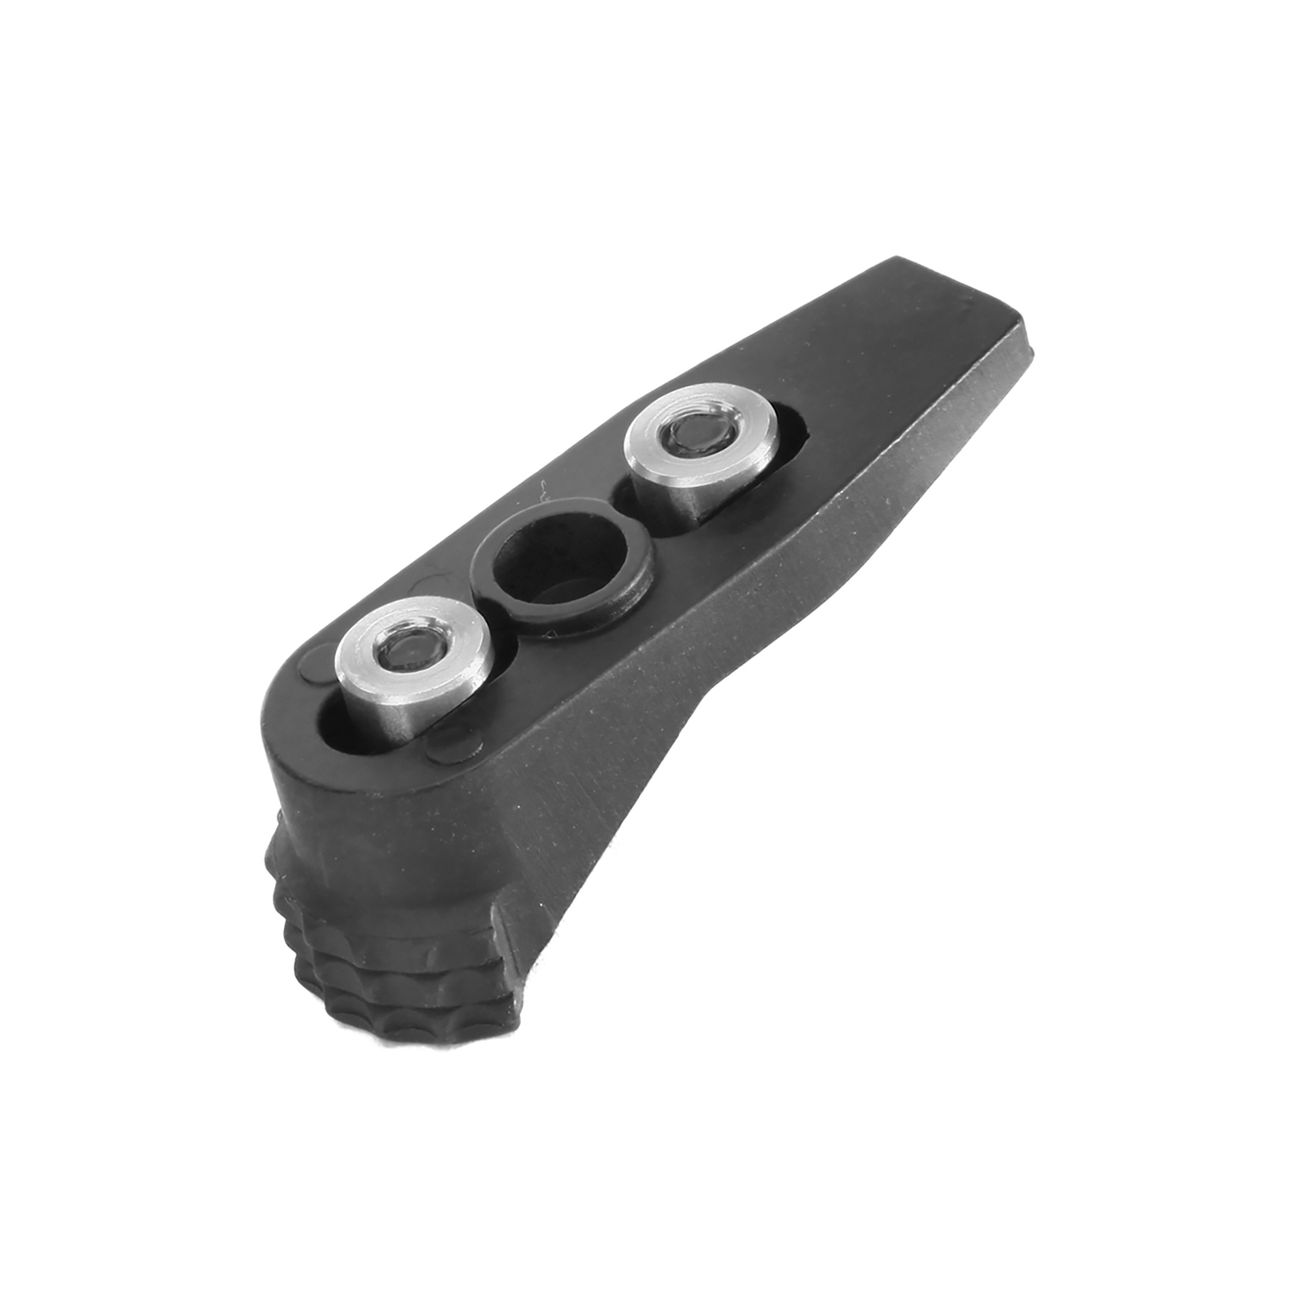 Ares KeyMod Aluminium Hand Stop Octarms Type-A schwarz Bild 3